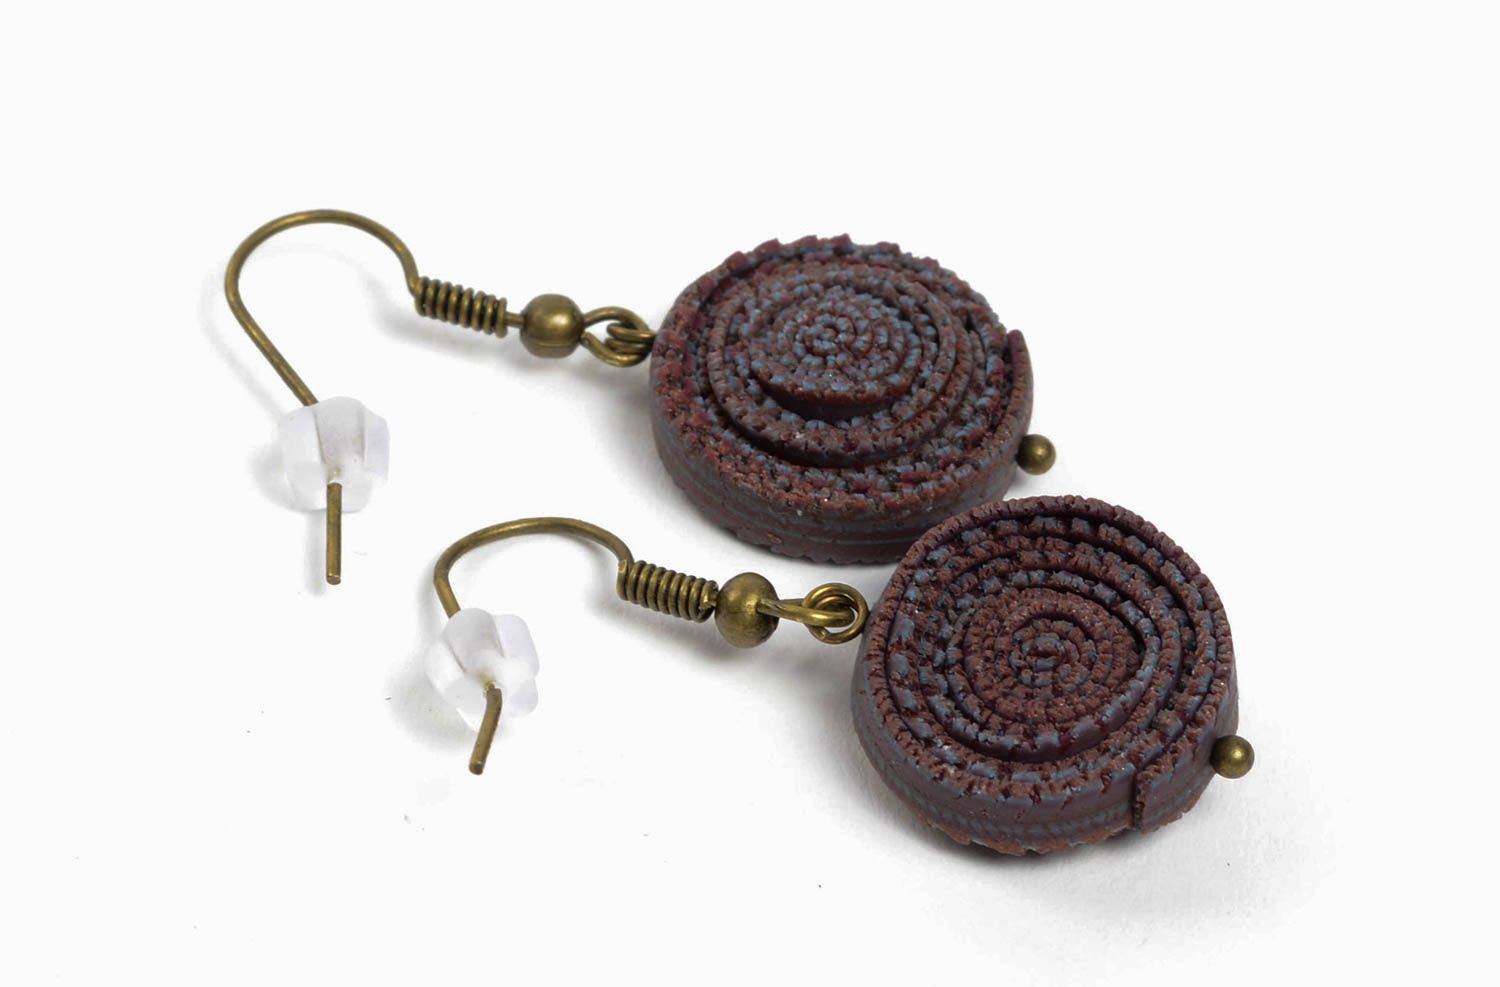 Plastic earrings flower earrings molded earrings with charms handmade jewelry photo 1